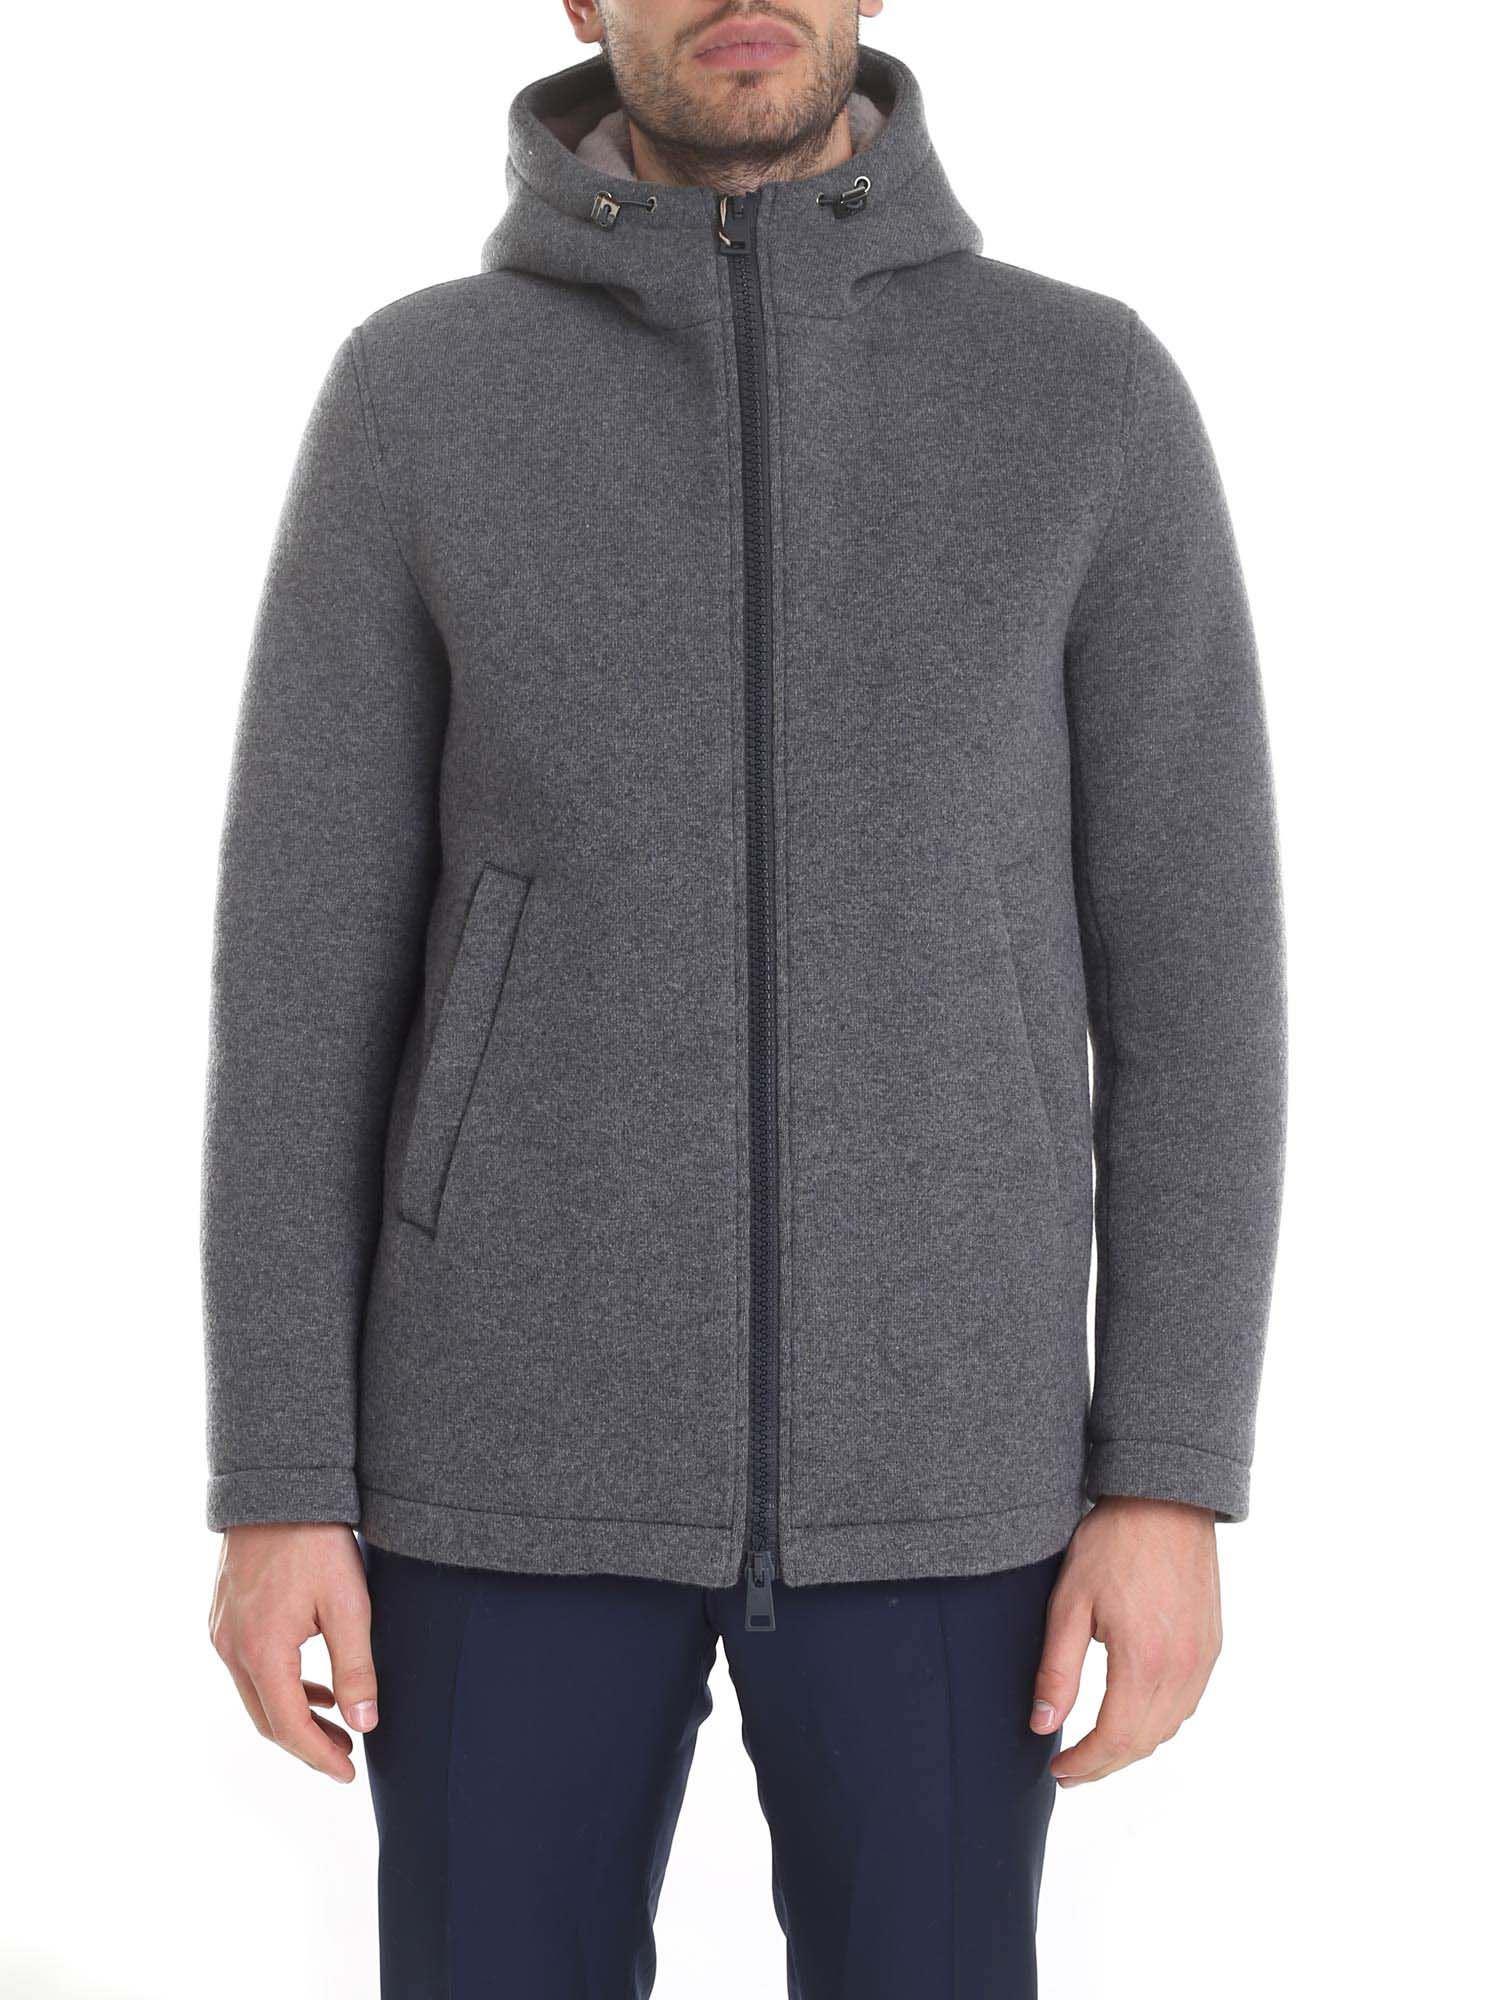 Herno Wool Resort Jacket In Melange Gray for Men - Lyst